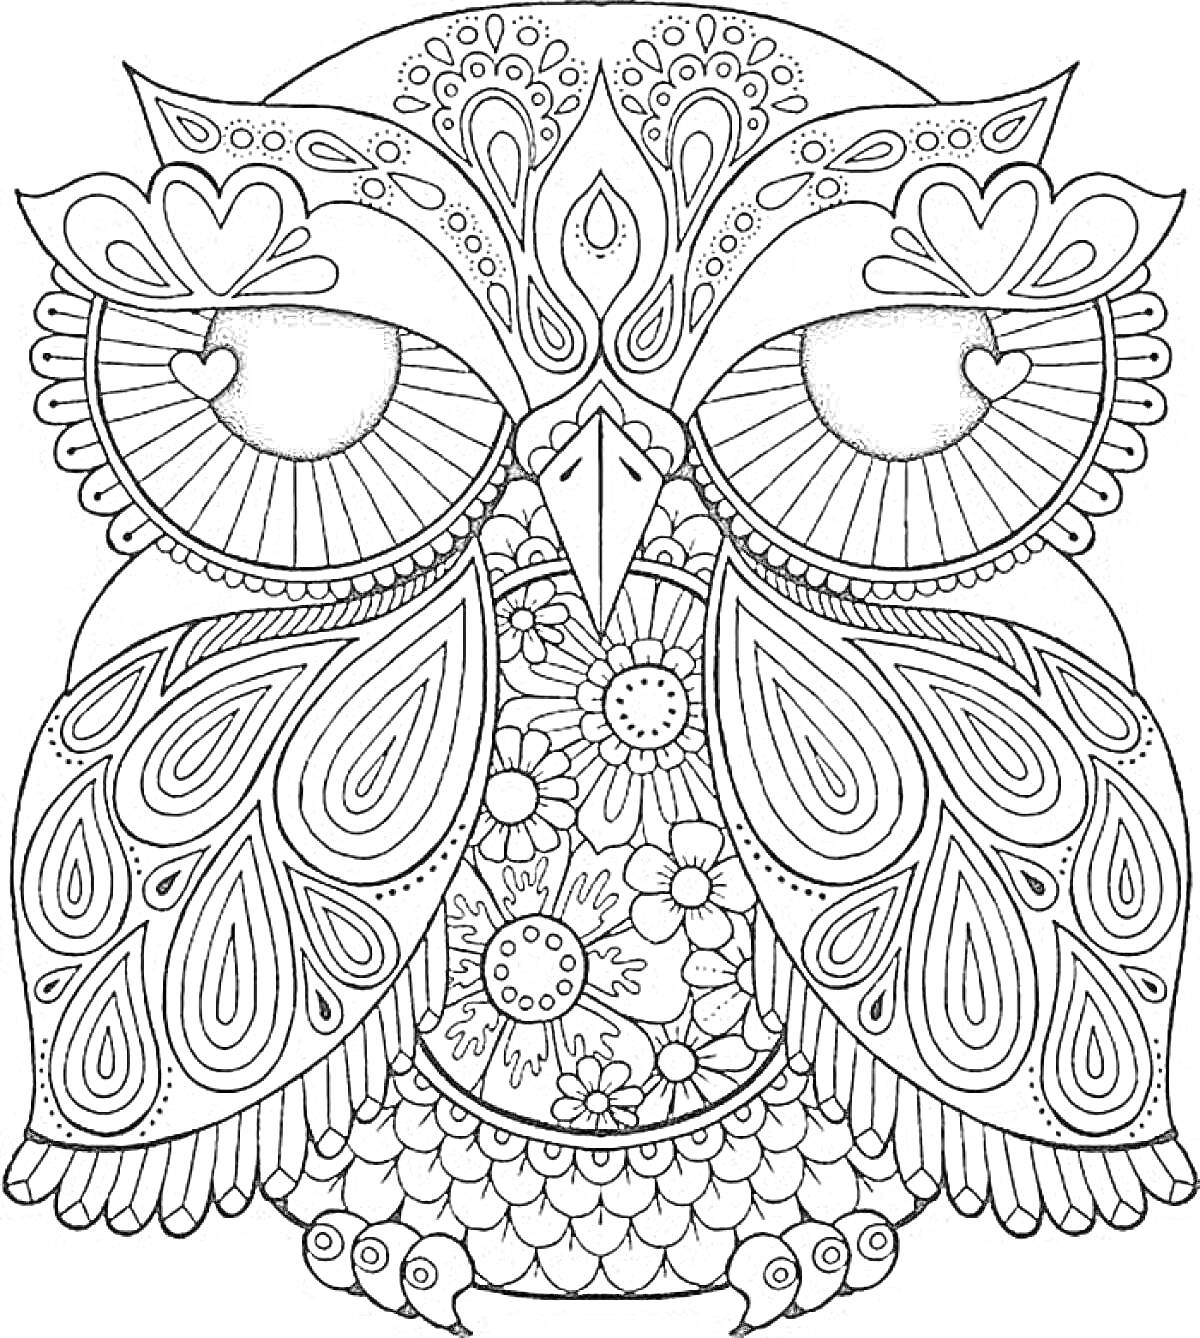 Раскраска Раскраска: антистресс сова с узорами, цветами, и сердечками